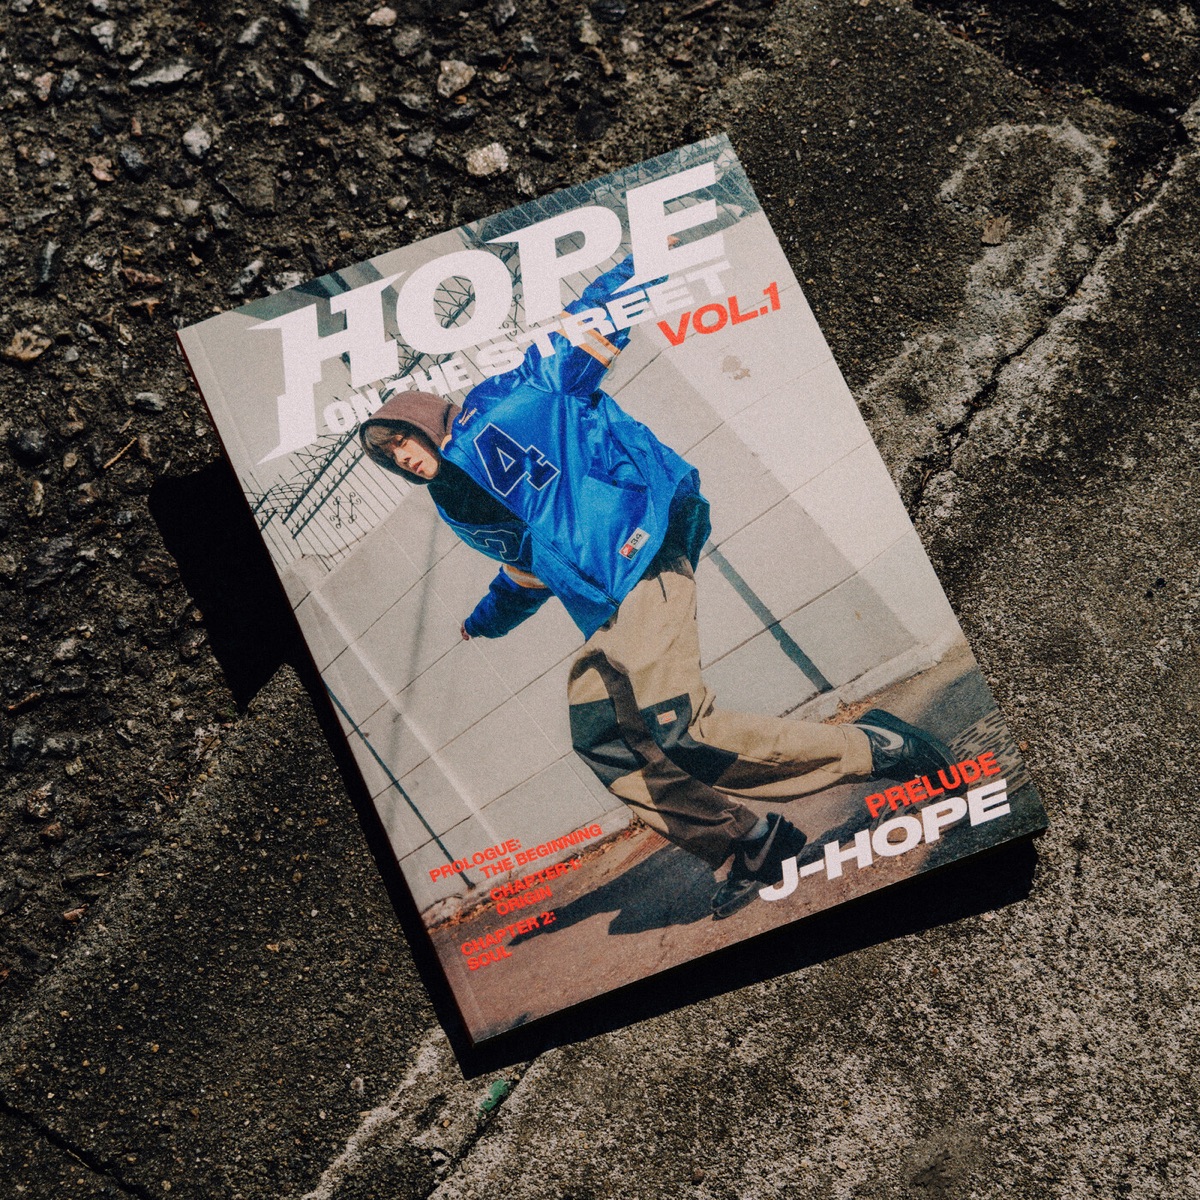 j-hope HOPE ON THE STREET VOL. 1 - EP cover artwork